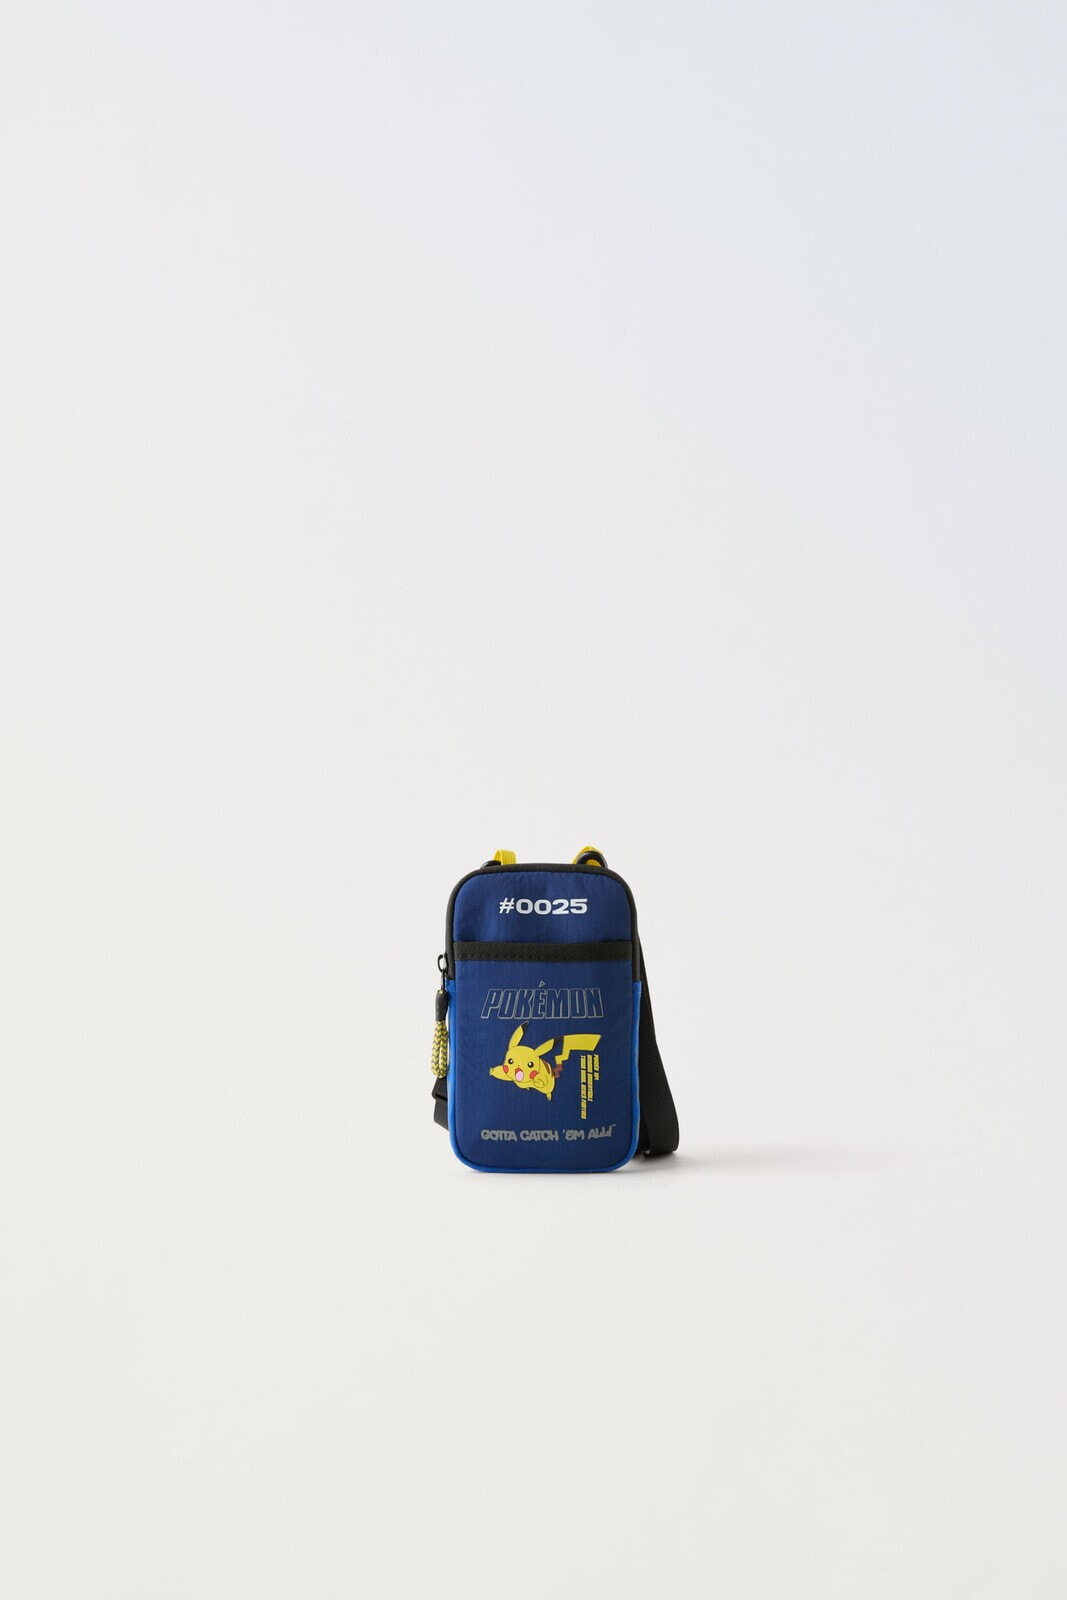 Pikachu pokémon ™ mobile phone bag